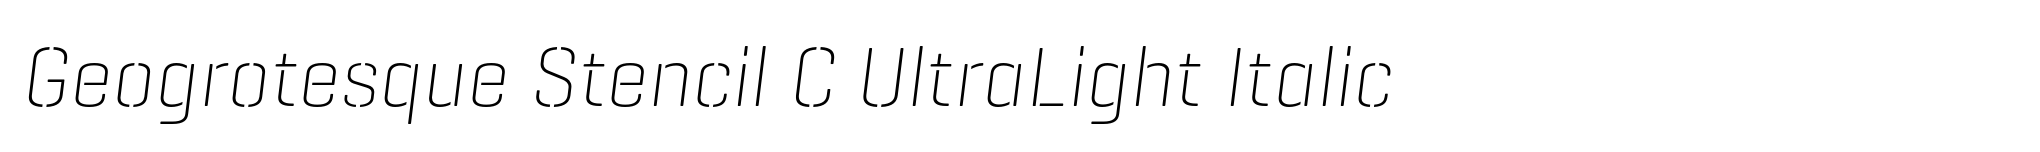 Geogrotesque Stencil C UltraLight Italic image